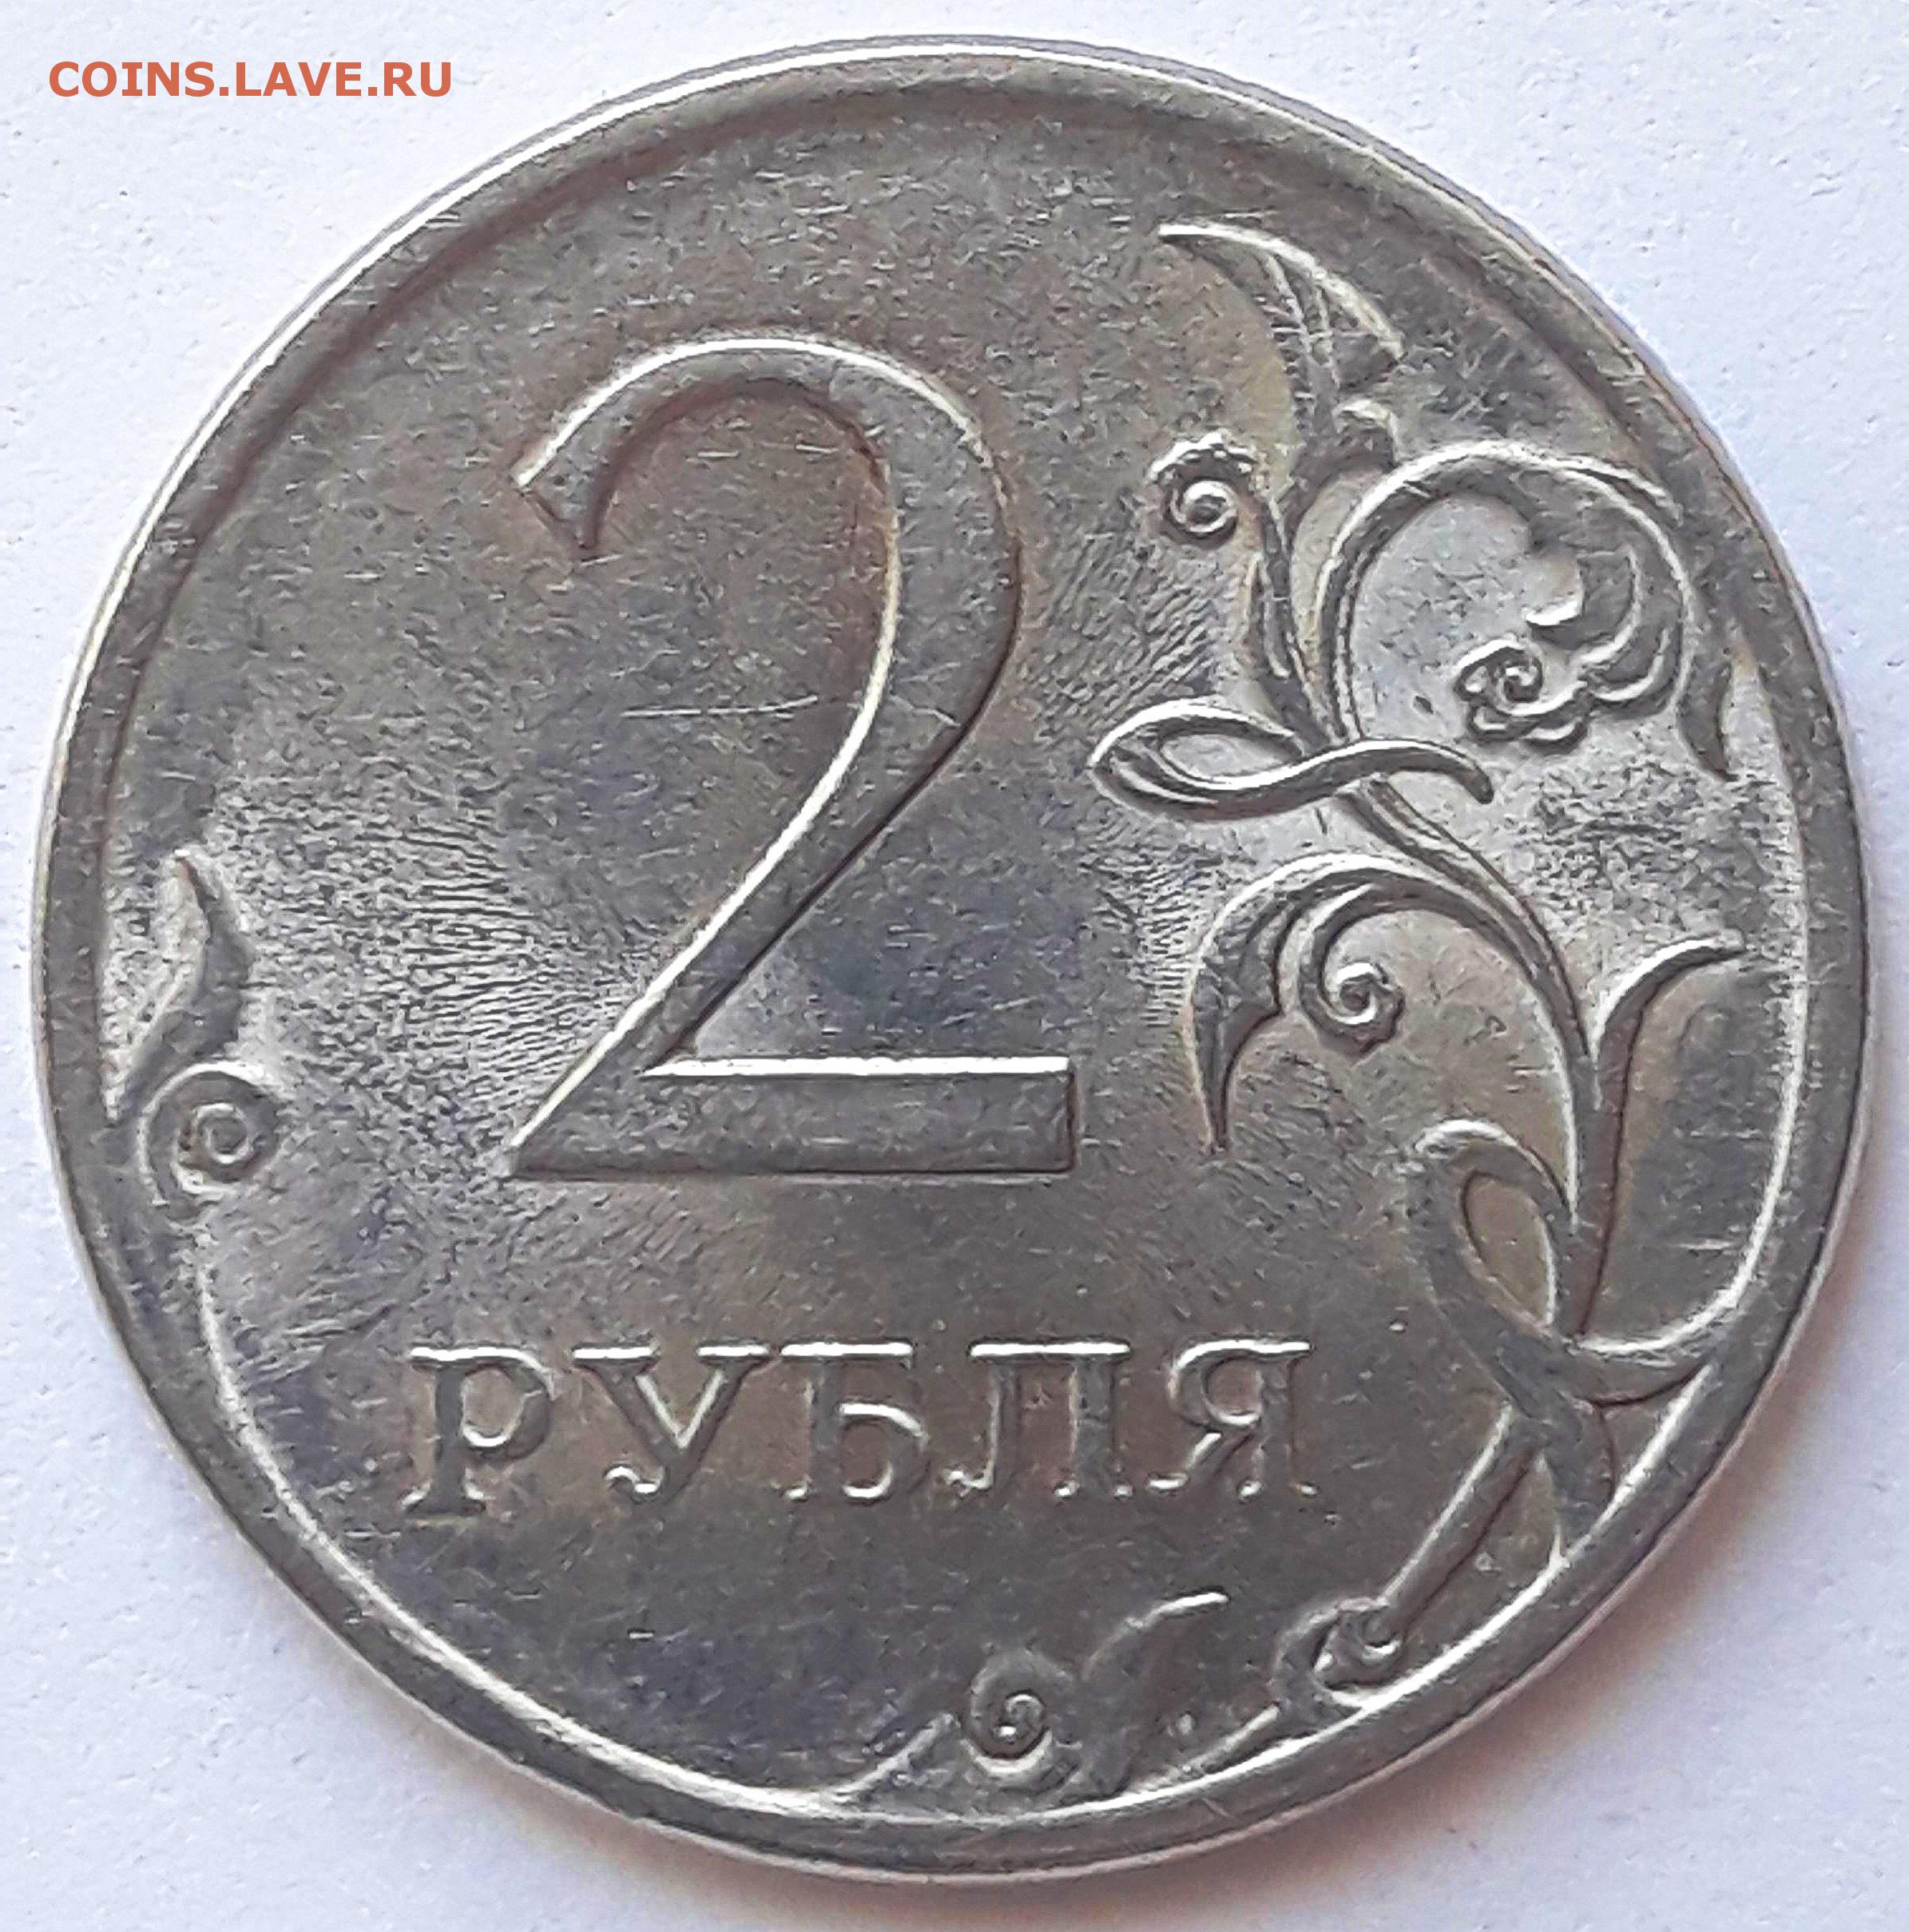 Руб ля. 2 Рубля 2012г. 2 Рубля 2000 года п. х. Виттенштейн. Засор штемпеля на монетах. Н А Дурова 2 рубля.